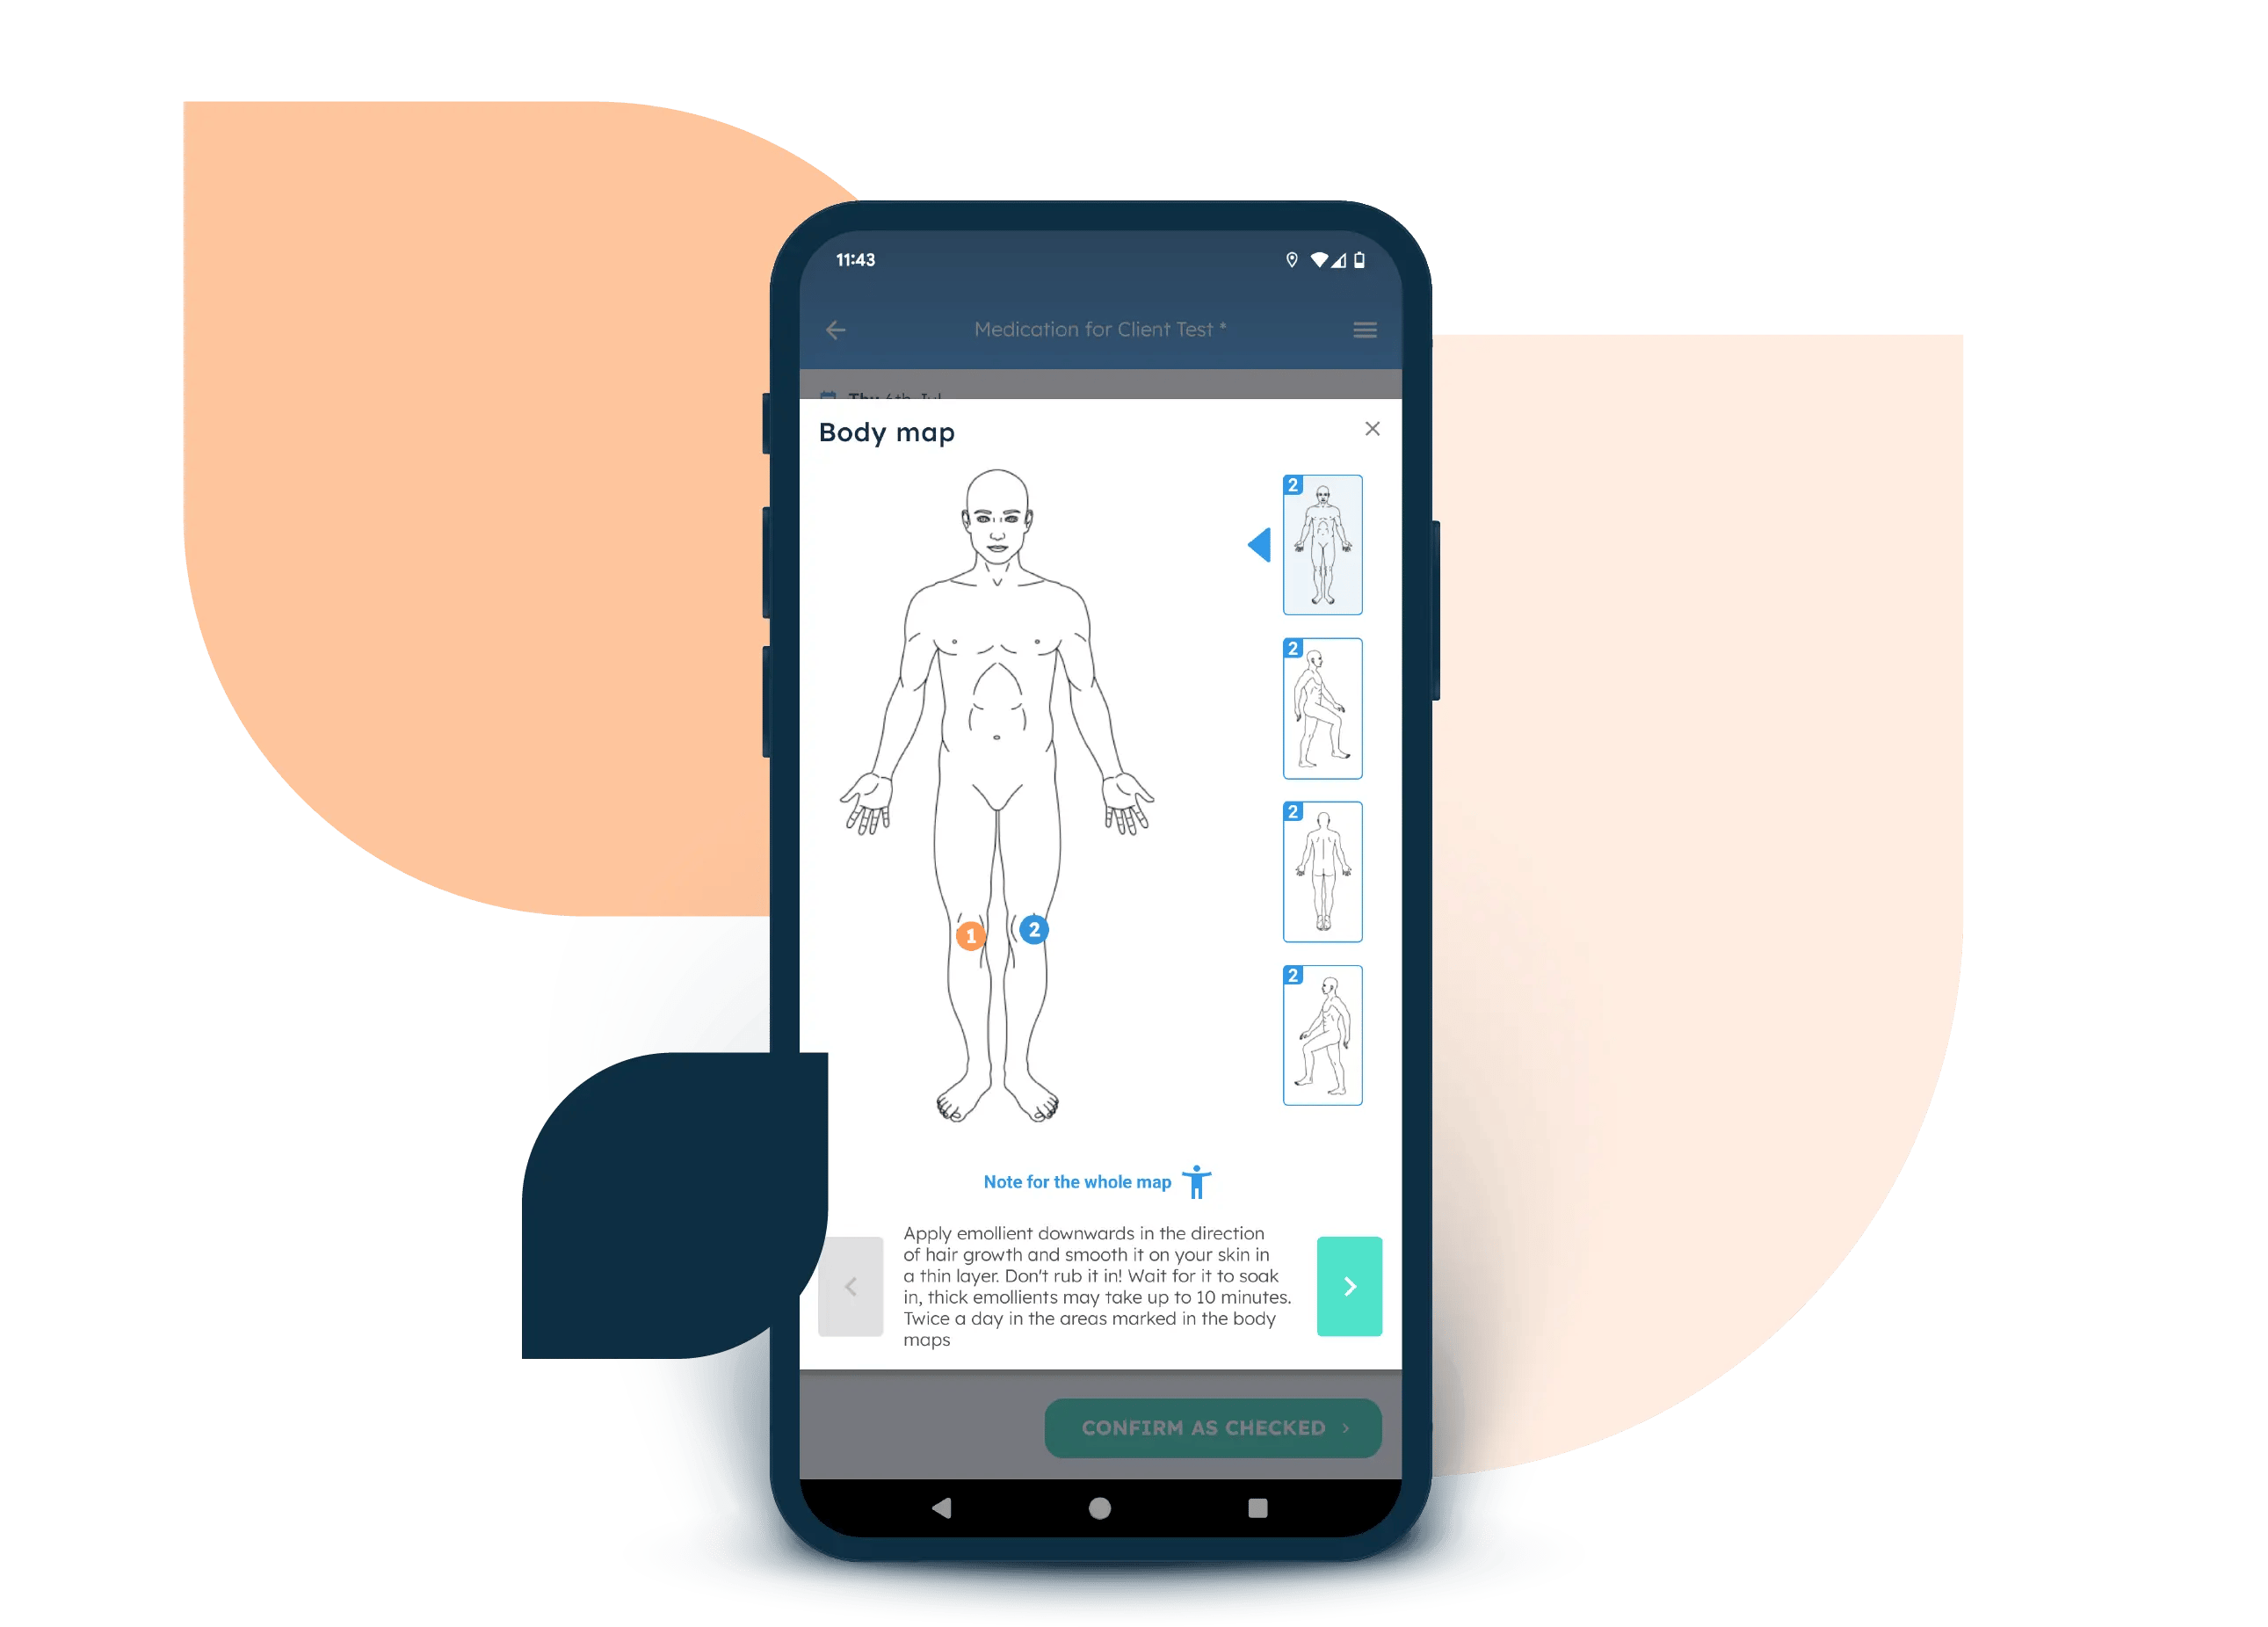 A body map in the Nursebuddy mobile app